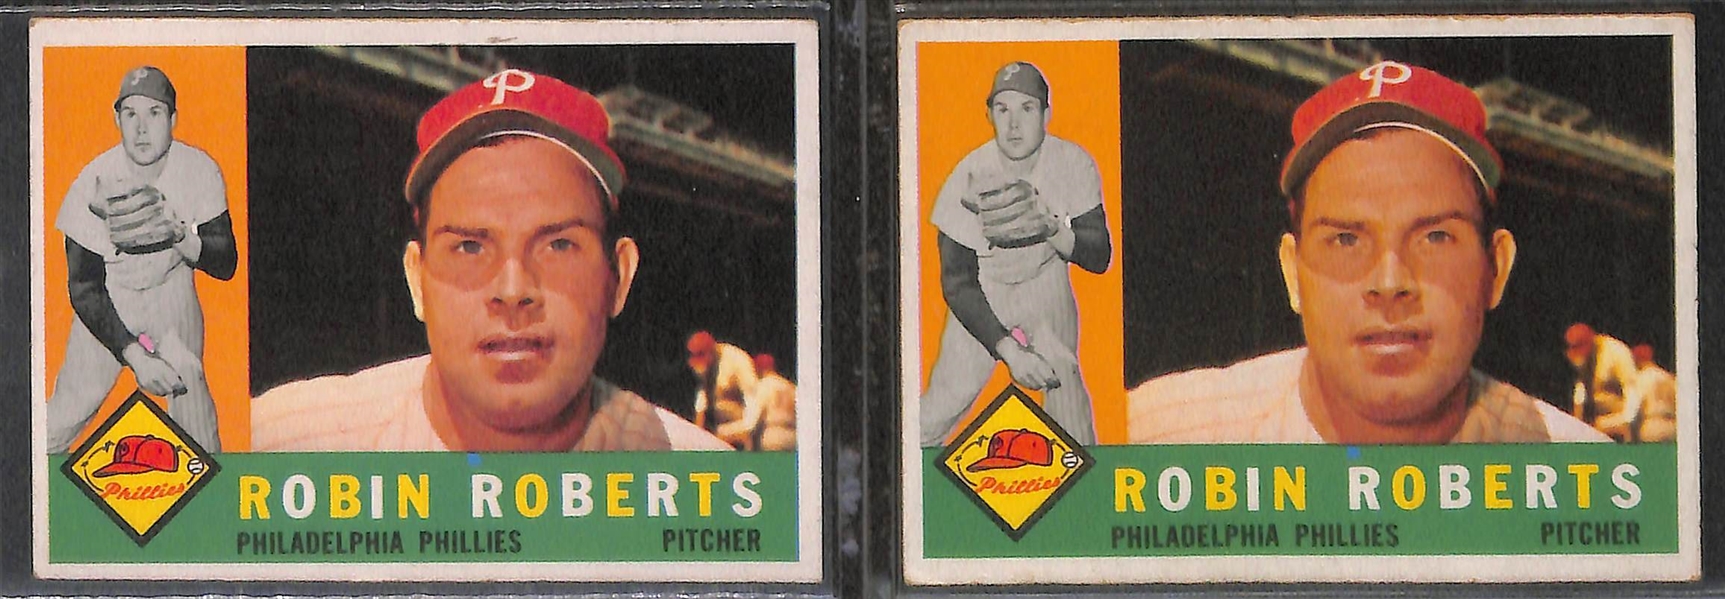 (150) 1959 & (170) 1960 Topps Baseball Cards w. Robin Roberts